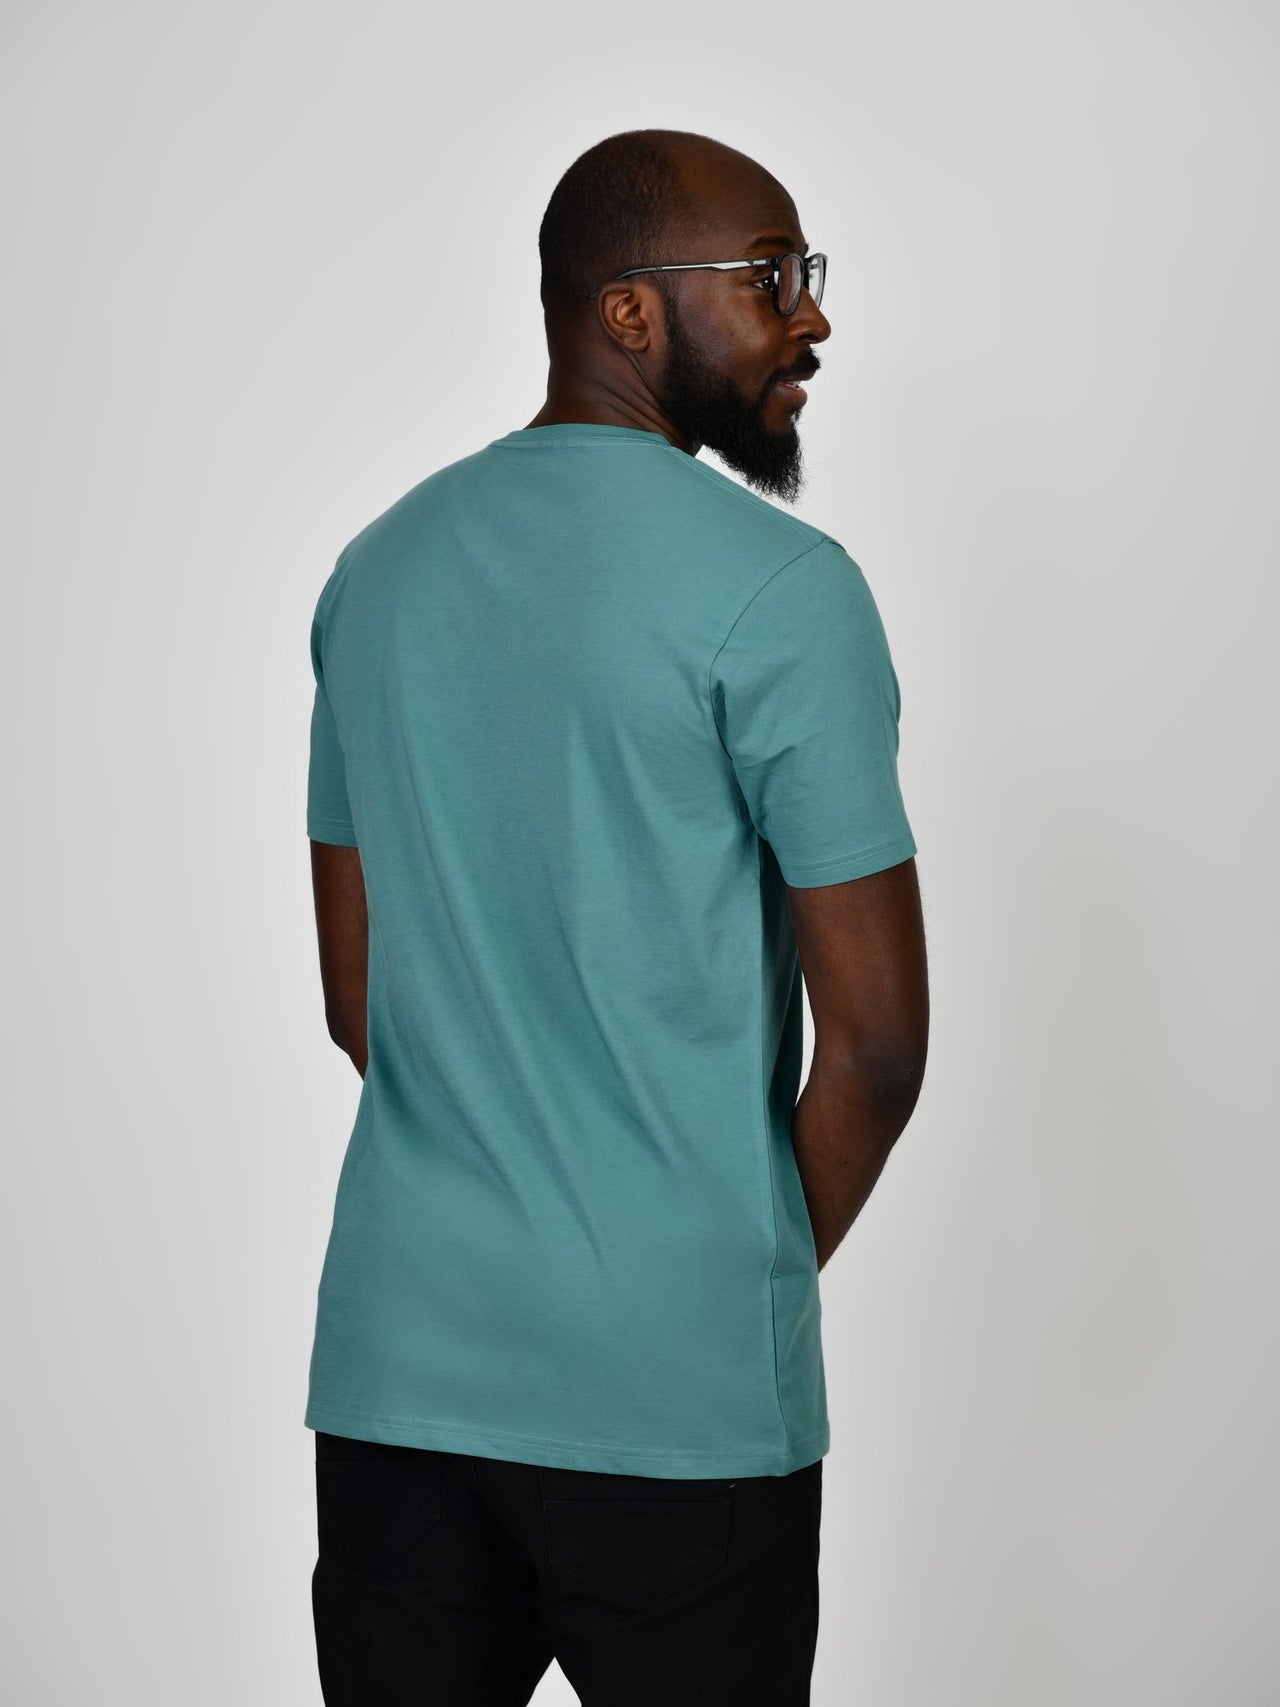 Forest Green V Neck T Shirt: Tall Men's V-Neck Cotton Green Tee – American  Tall